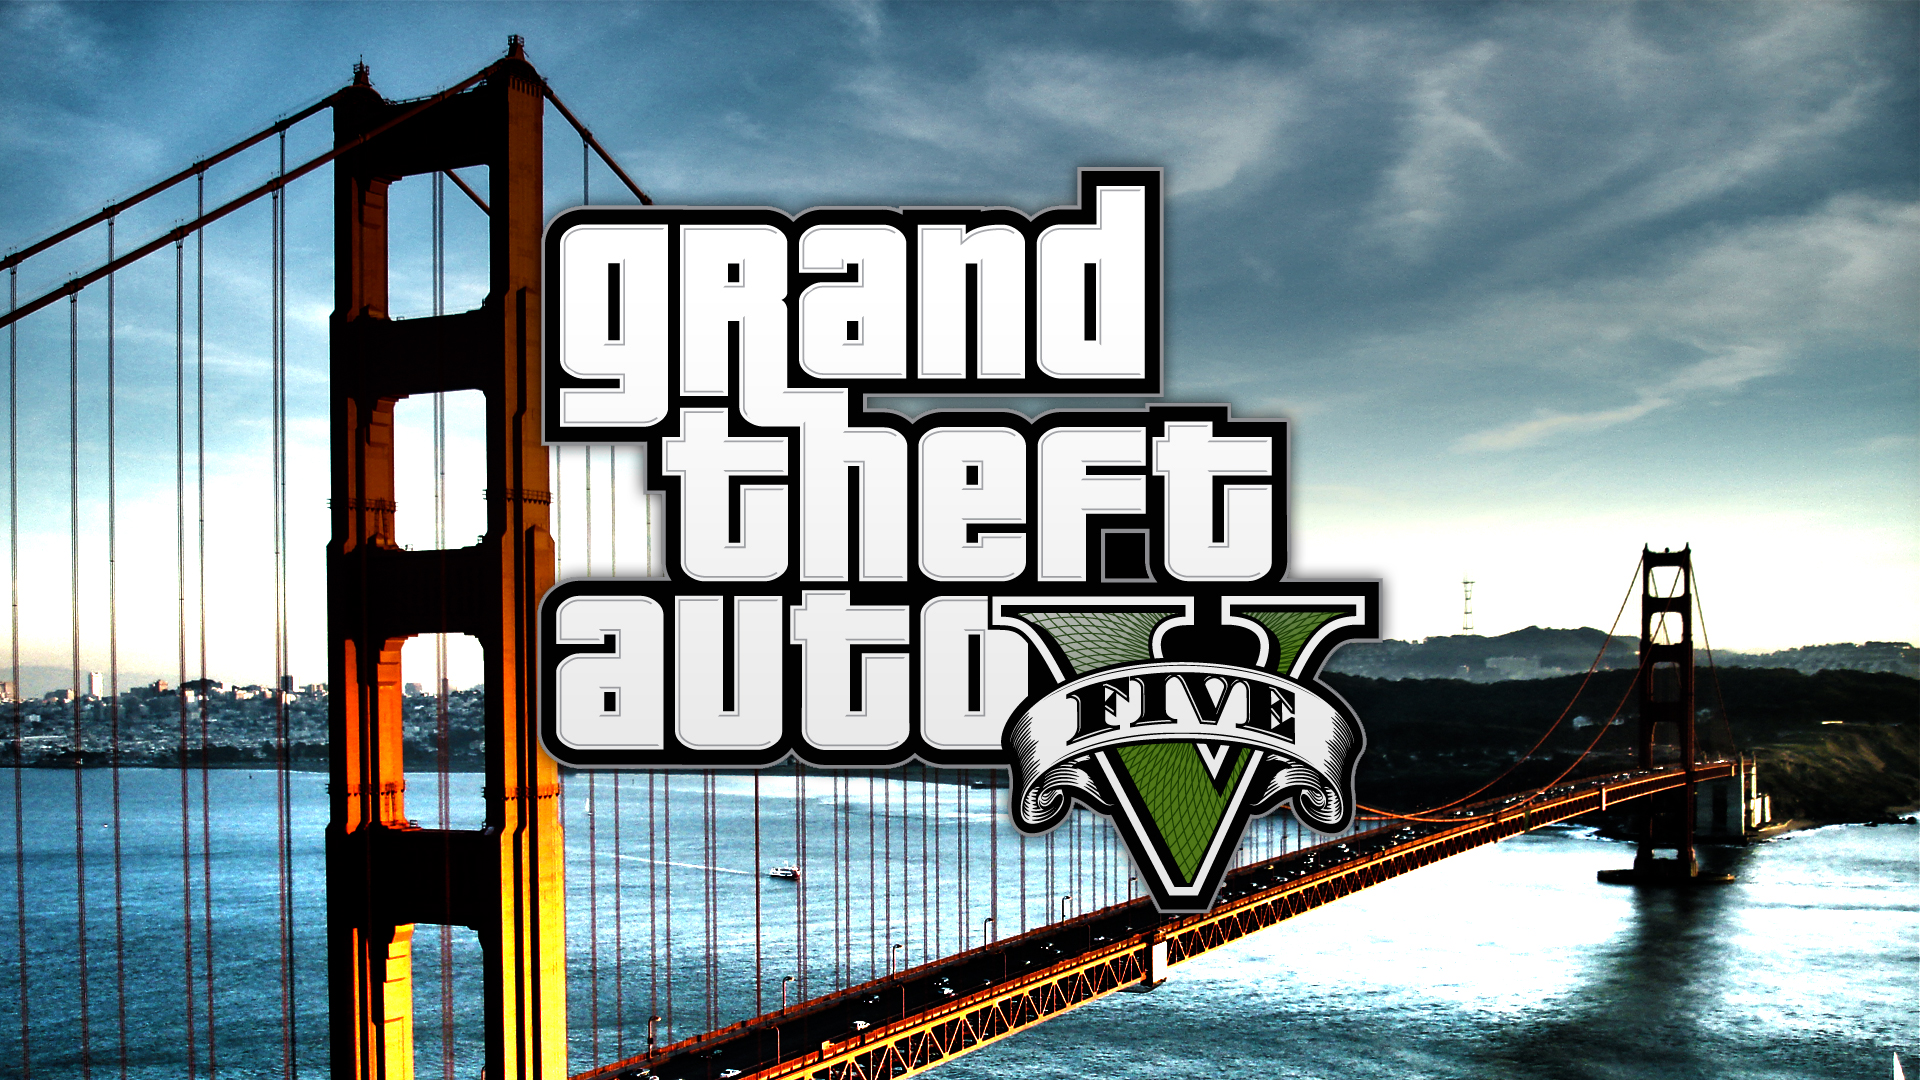 Wallpaper Gta Grand Theft Auto V Rockstar